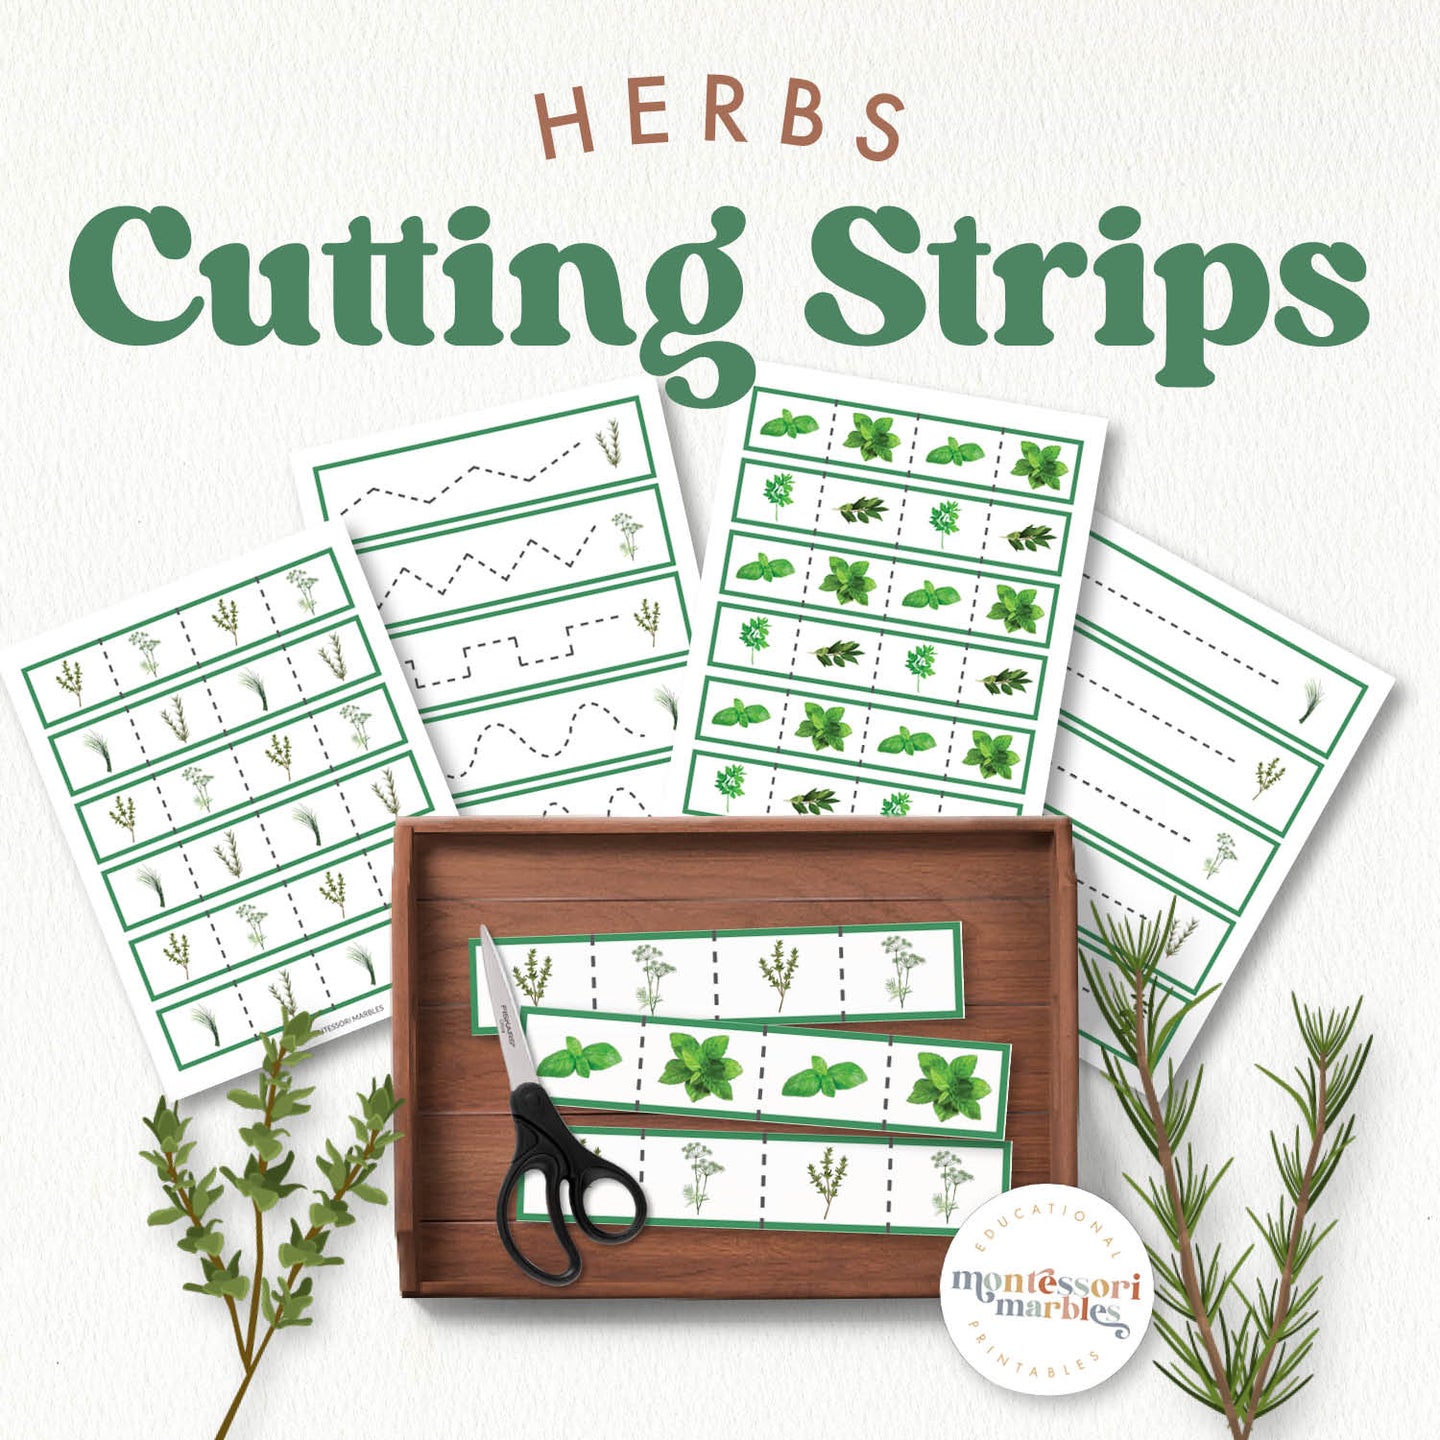 Herbs Cutting Strips